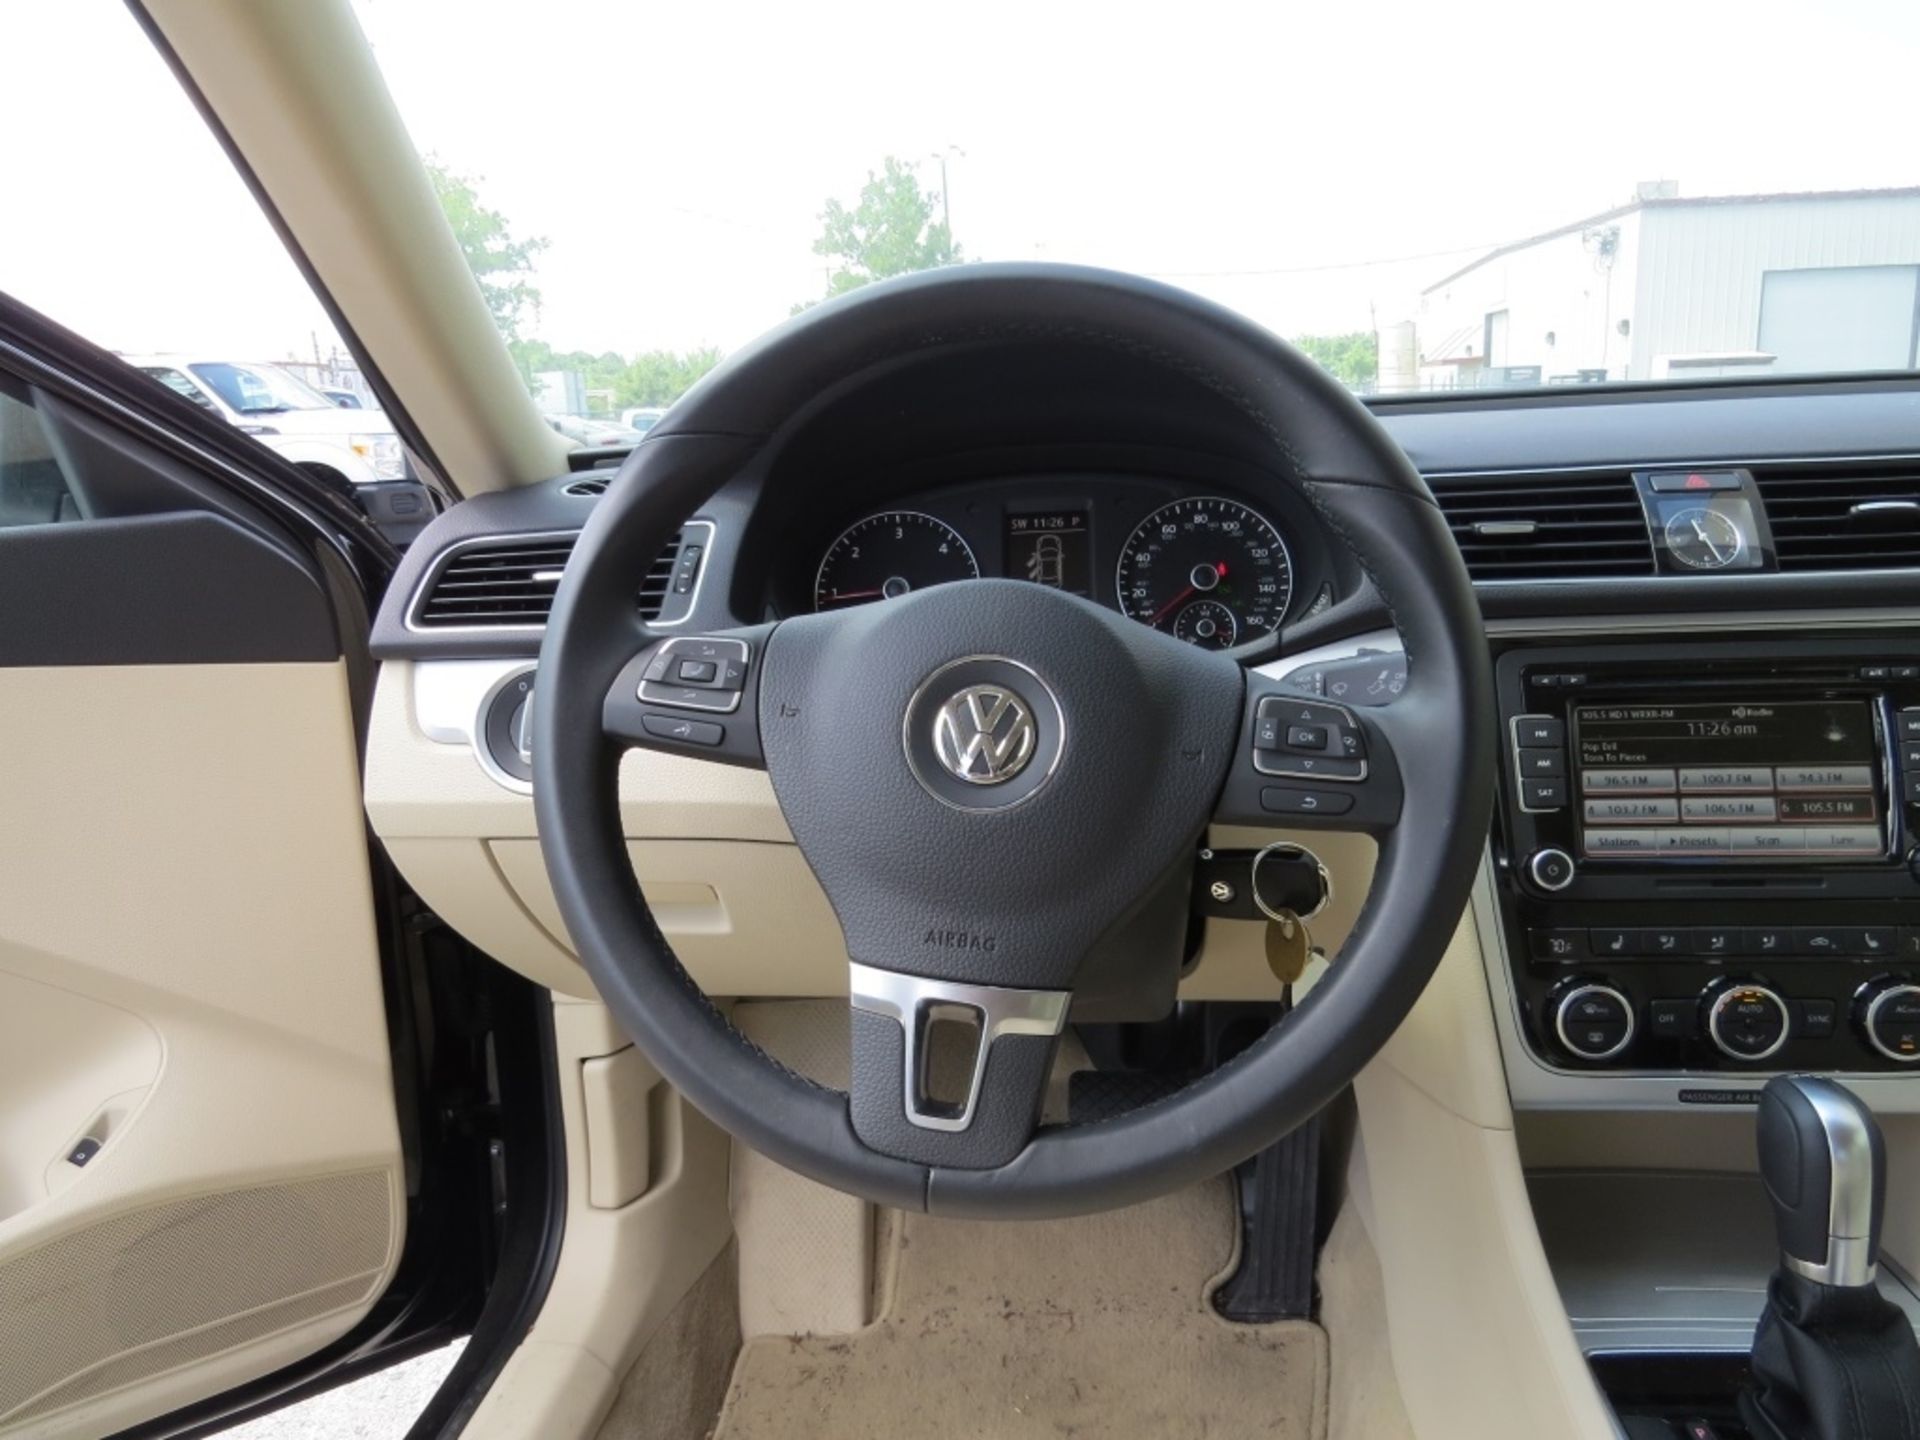 2012 VW Passat TDI Diesel - VIN-1VWBN7A3XCC096912 - Image 35 of 36